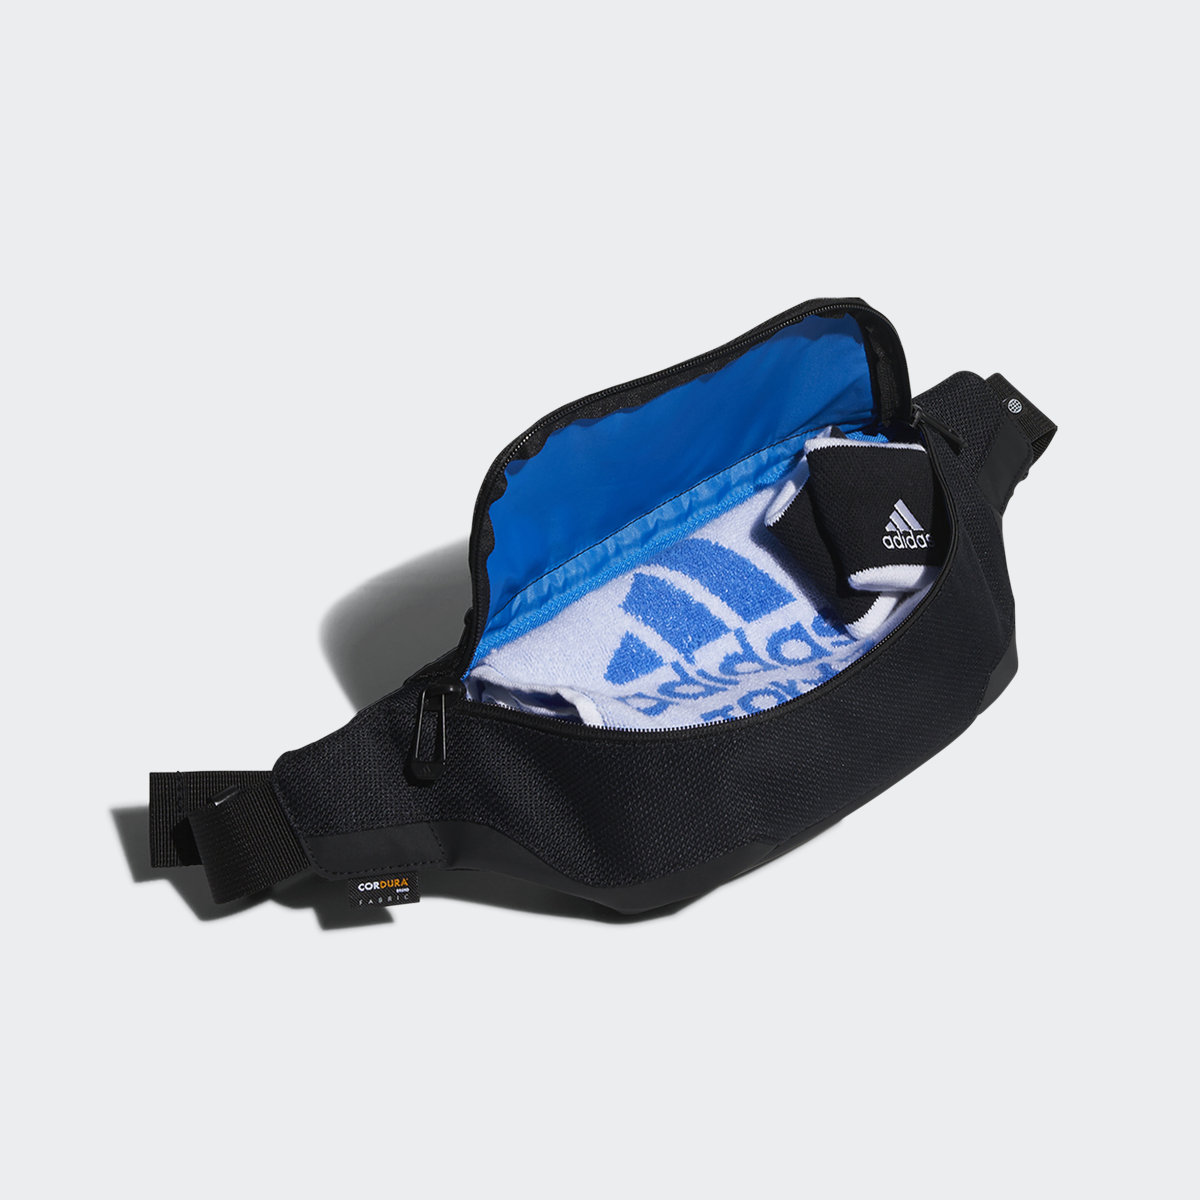 Adidas Endurance Packing System Waist Bag. 5